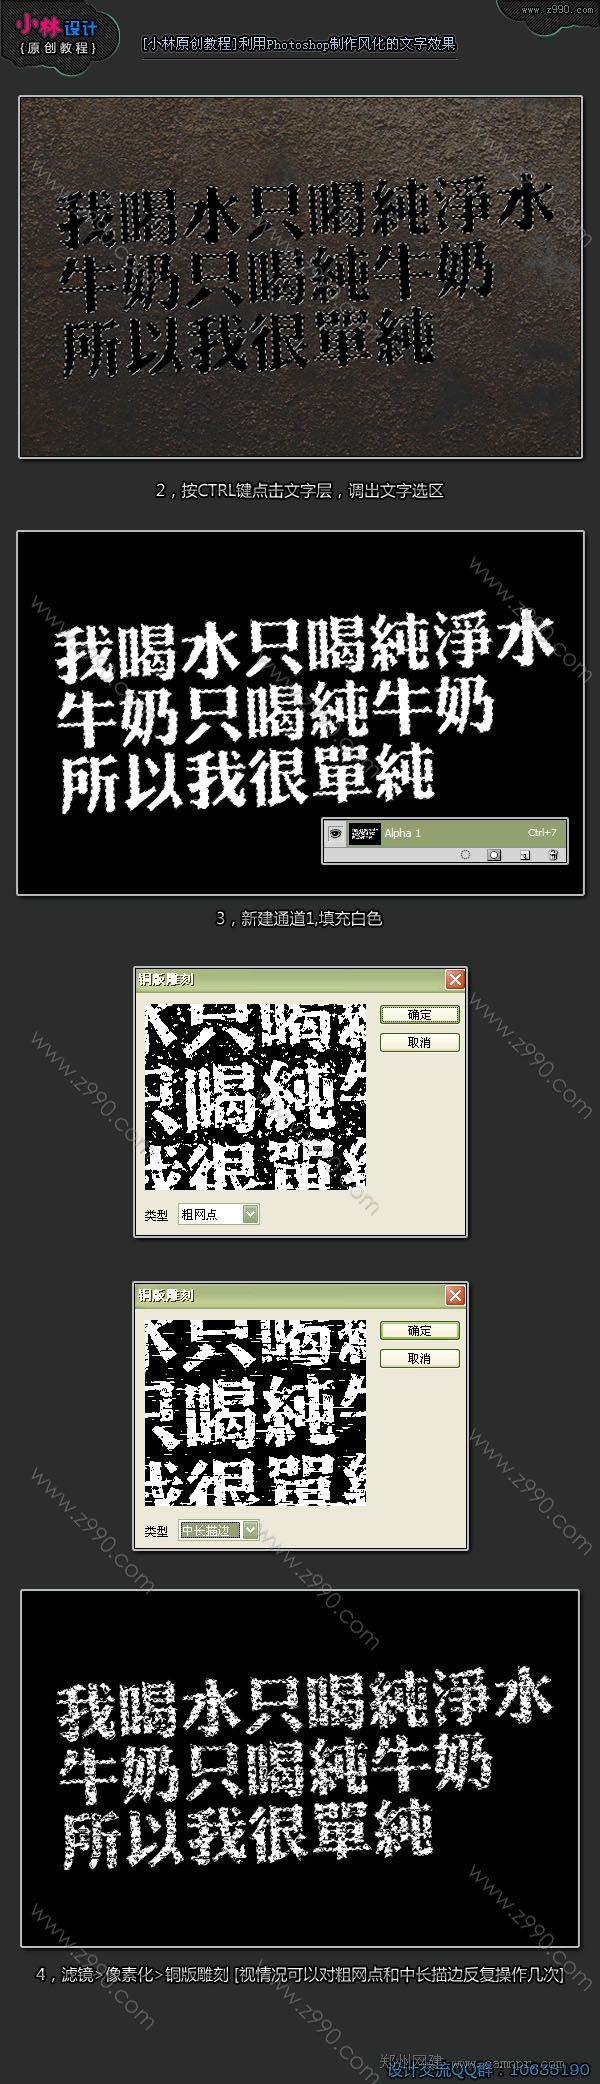 Photoshop制作逼真的墙面粉笔字效果,PS教程,贵州新华电脑学院